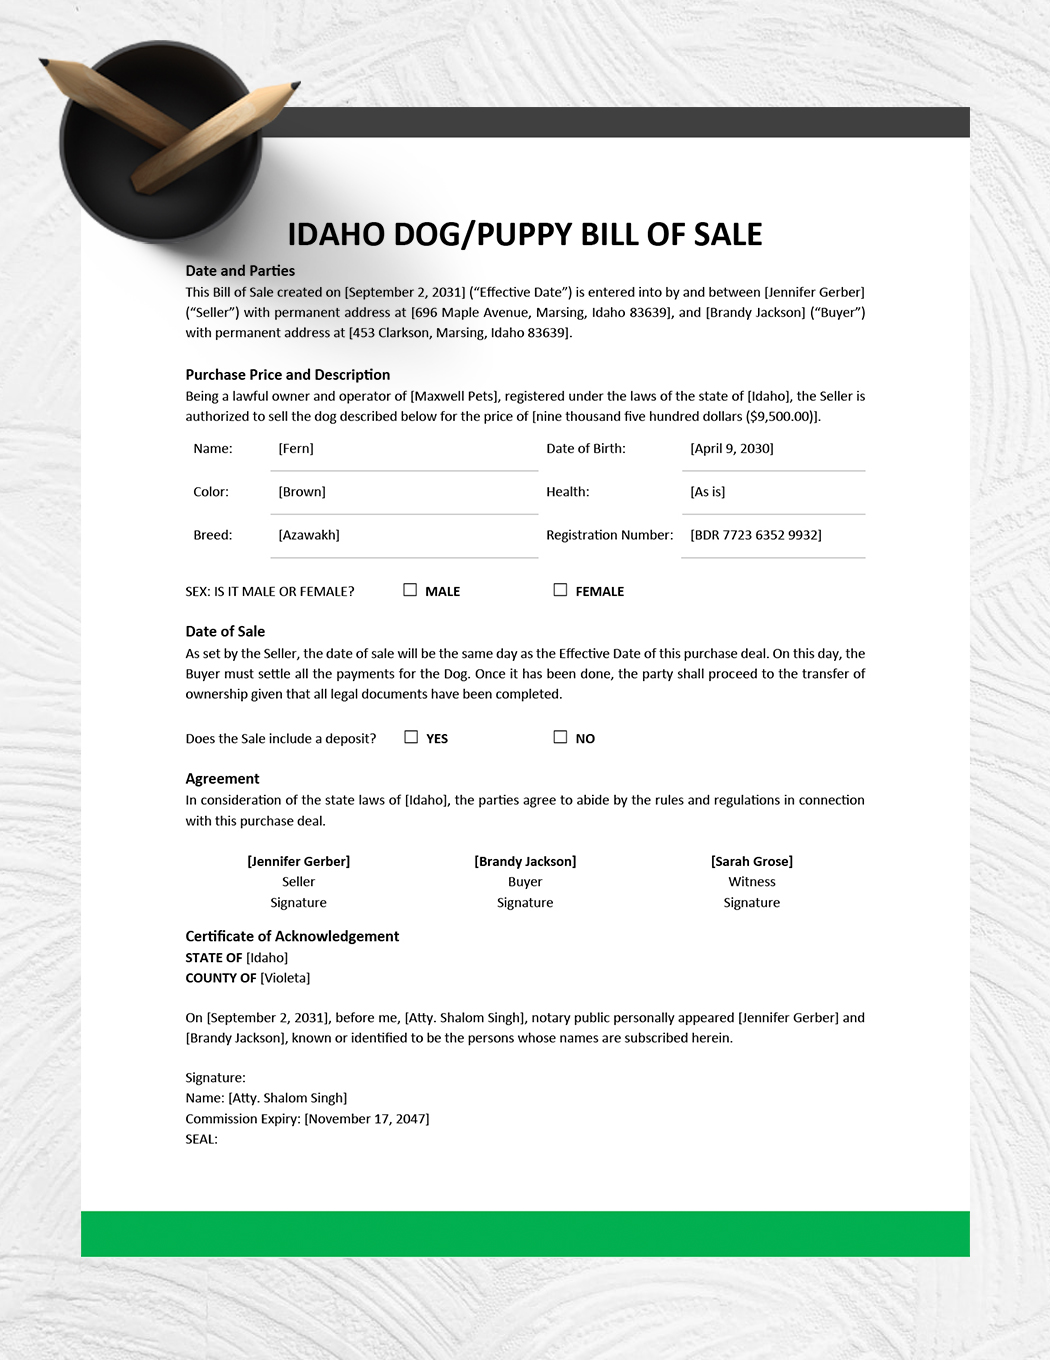 Idaho Dog / Puppy Bill of Sale Template